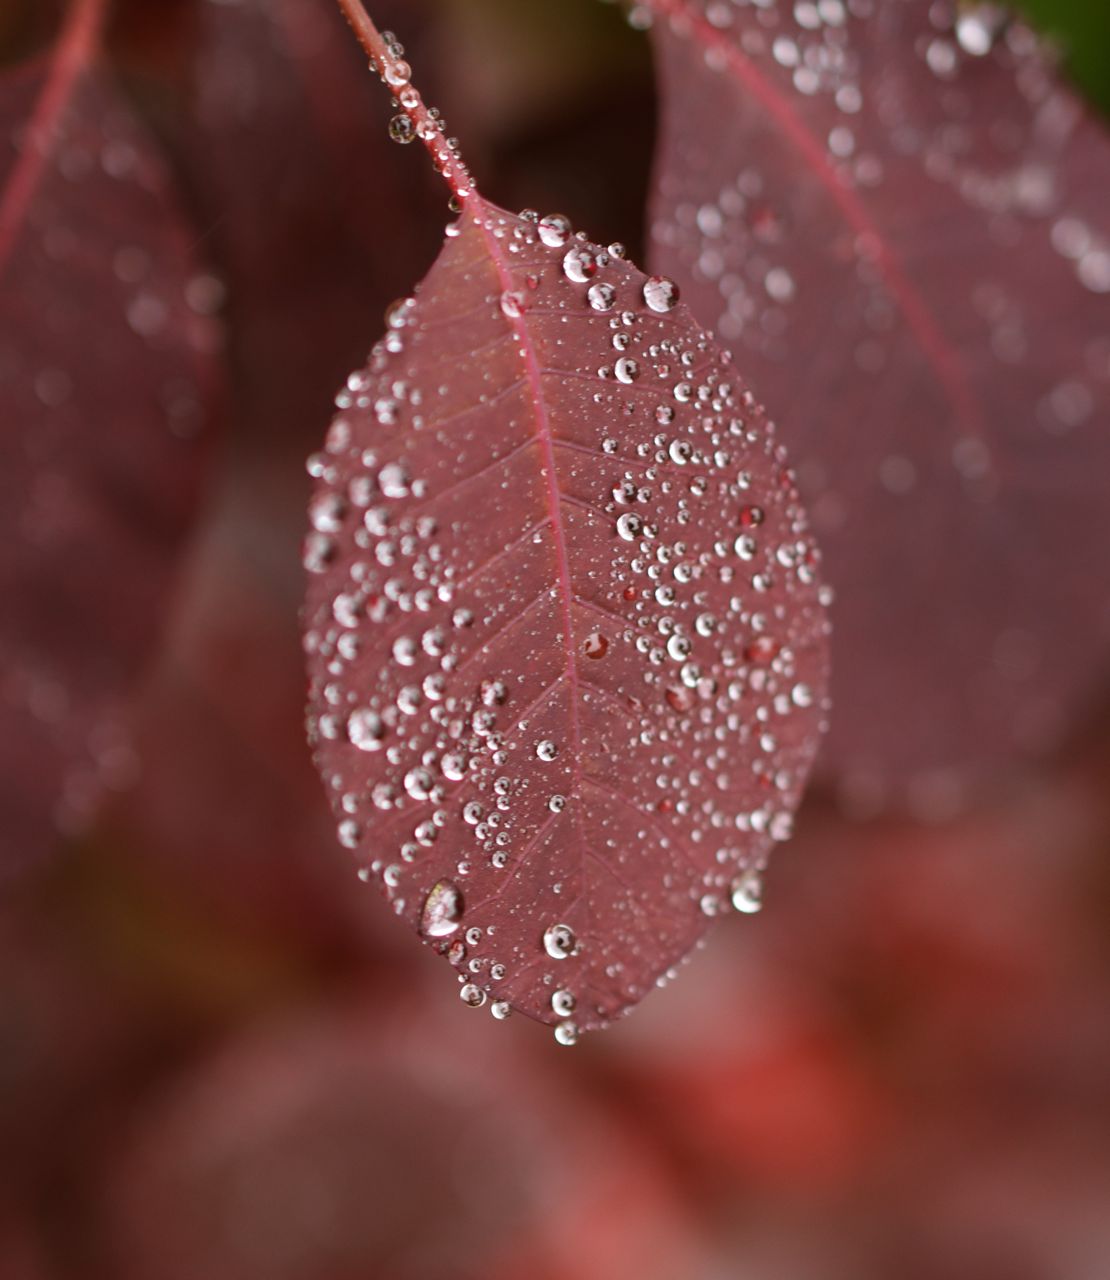 Cotinus leaf - with dew